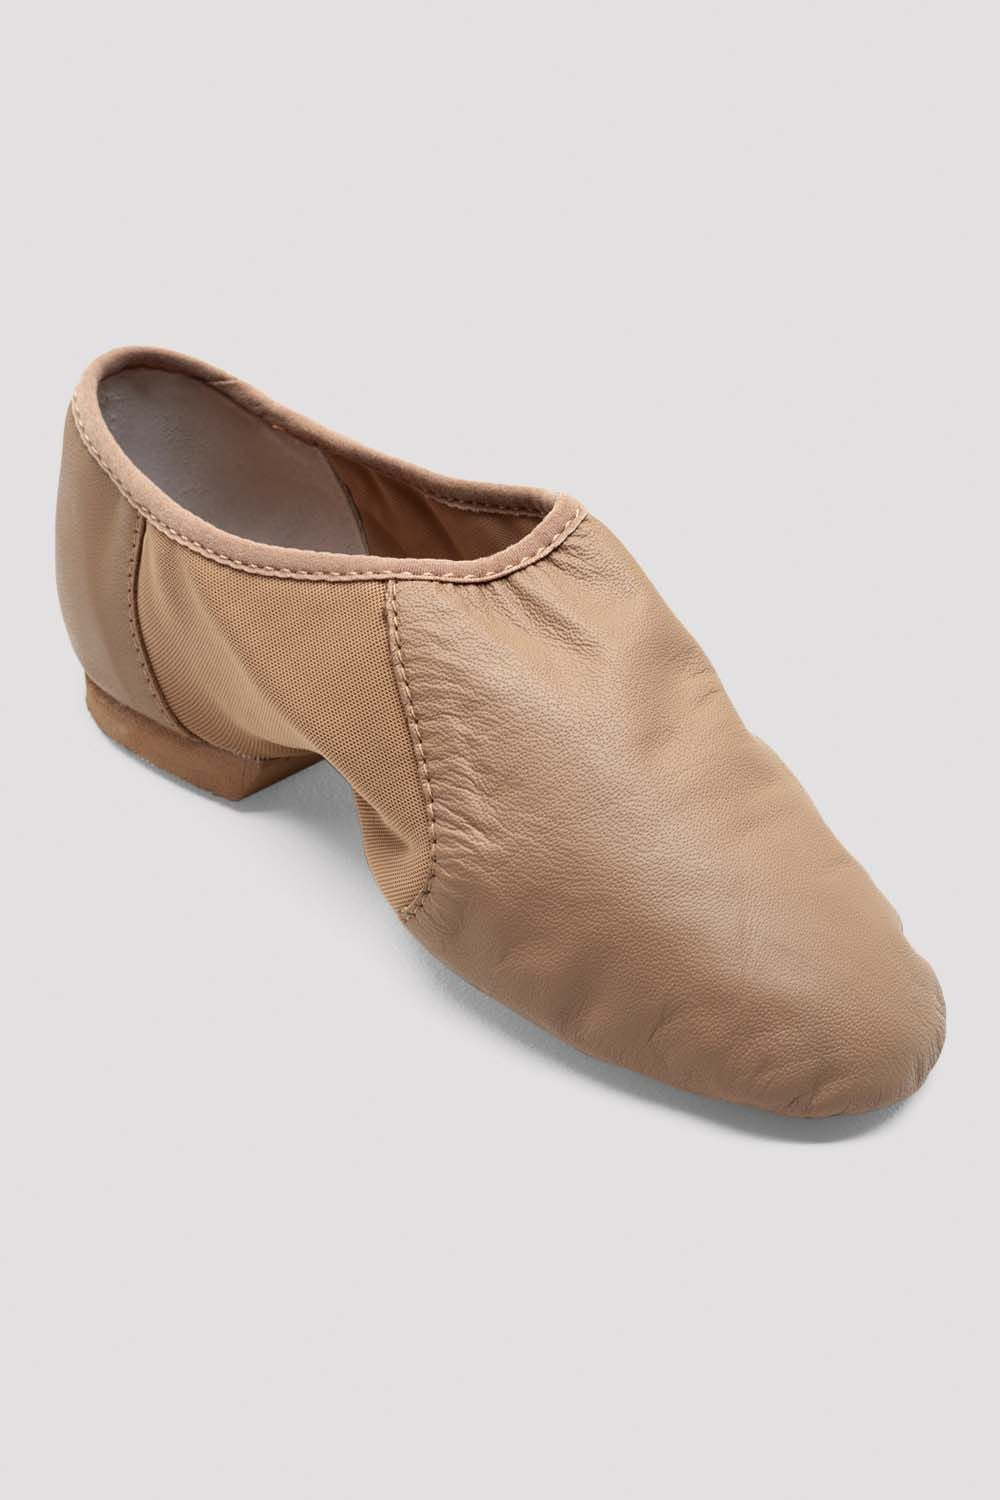 No-Tie Student Ballet Shoe Sizing Kit